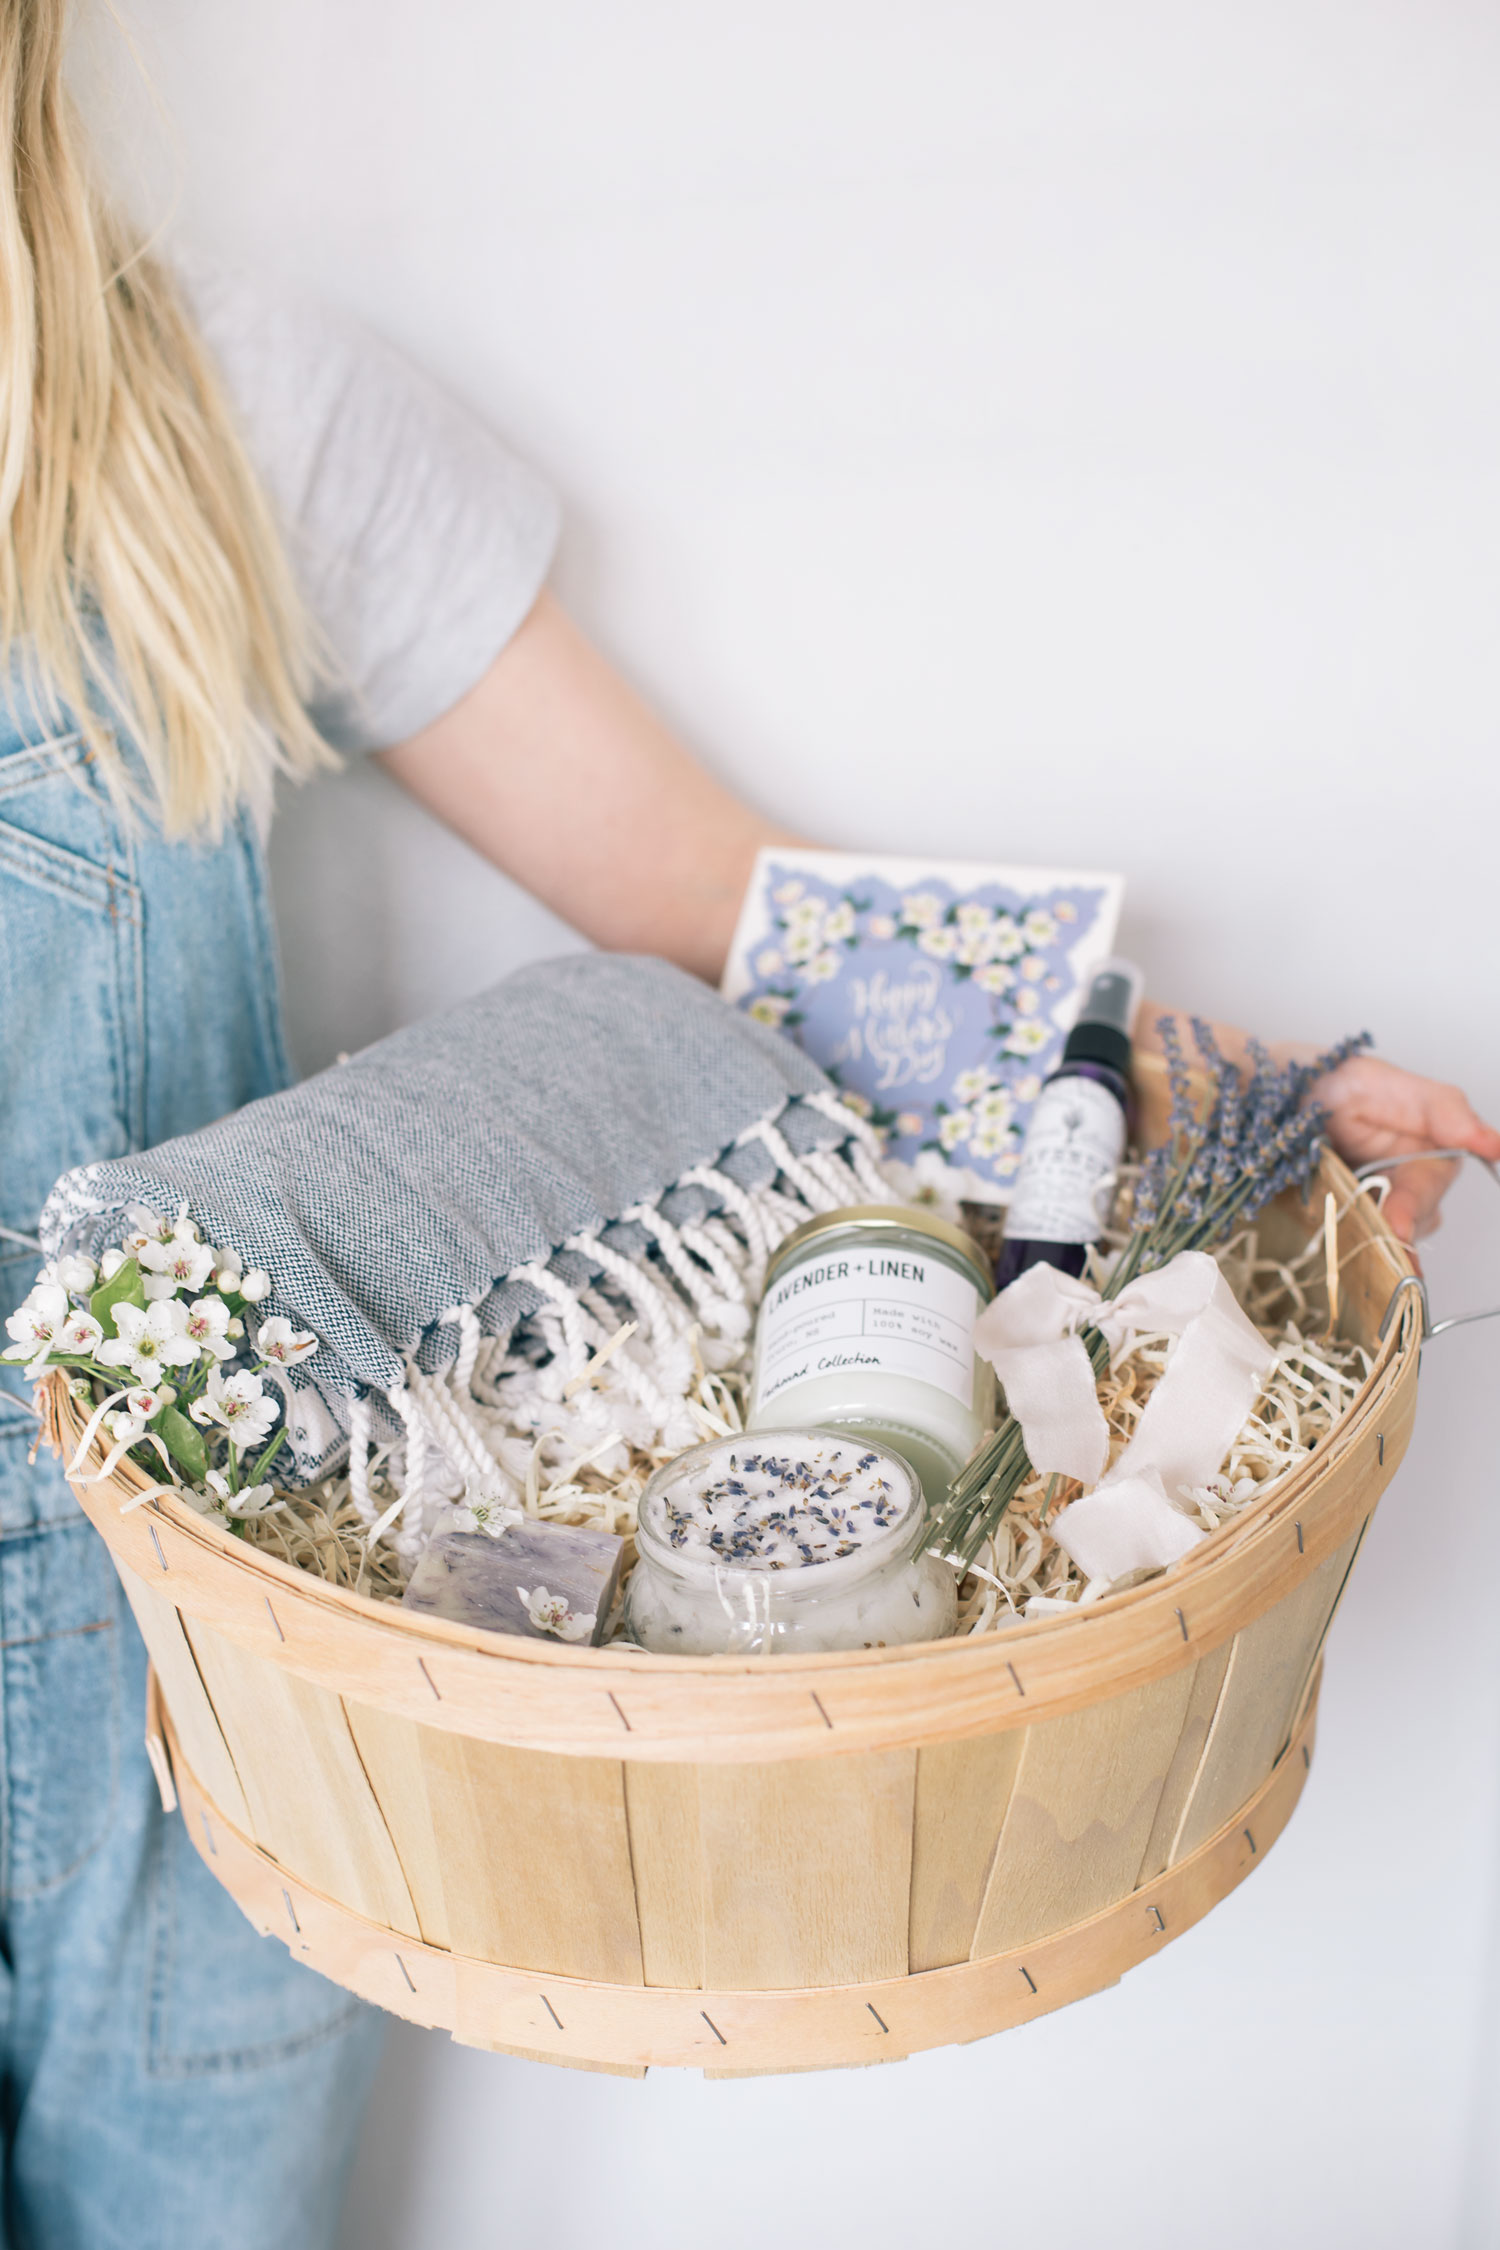 Mother's Day Lavender Basket + DIY Lavender Body Scrub | The